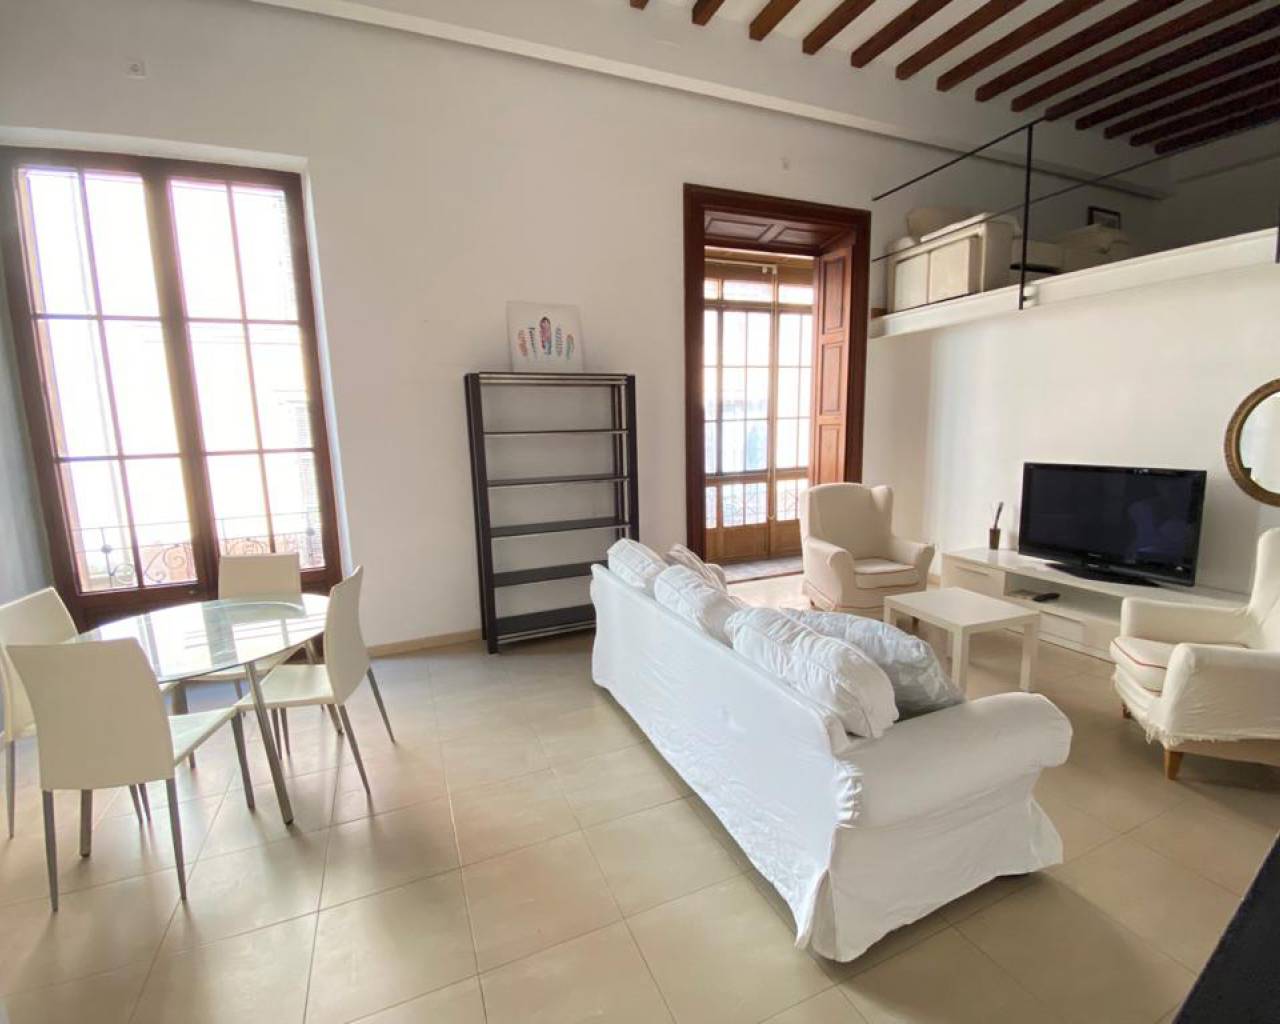 property for rent in Palma de Mallorca